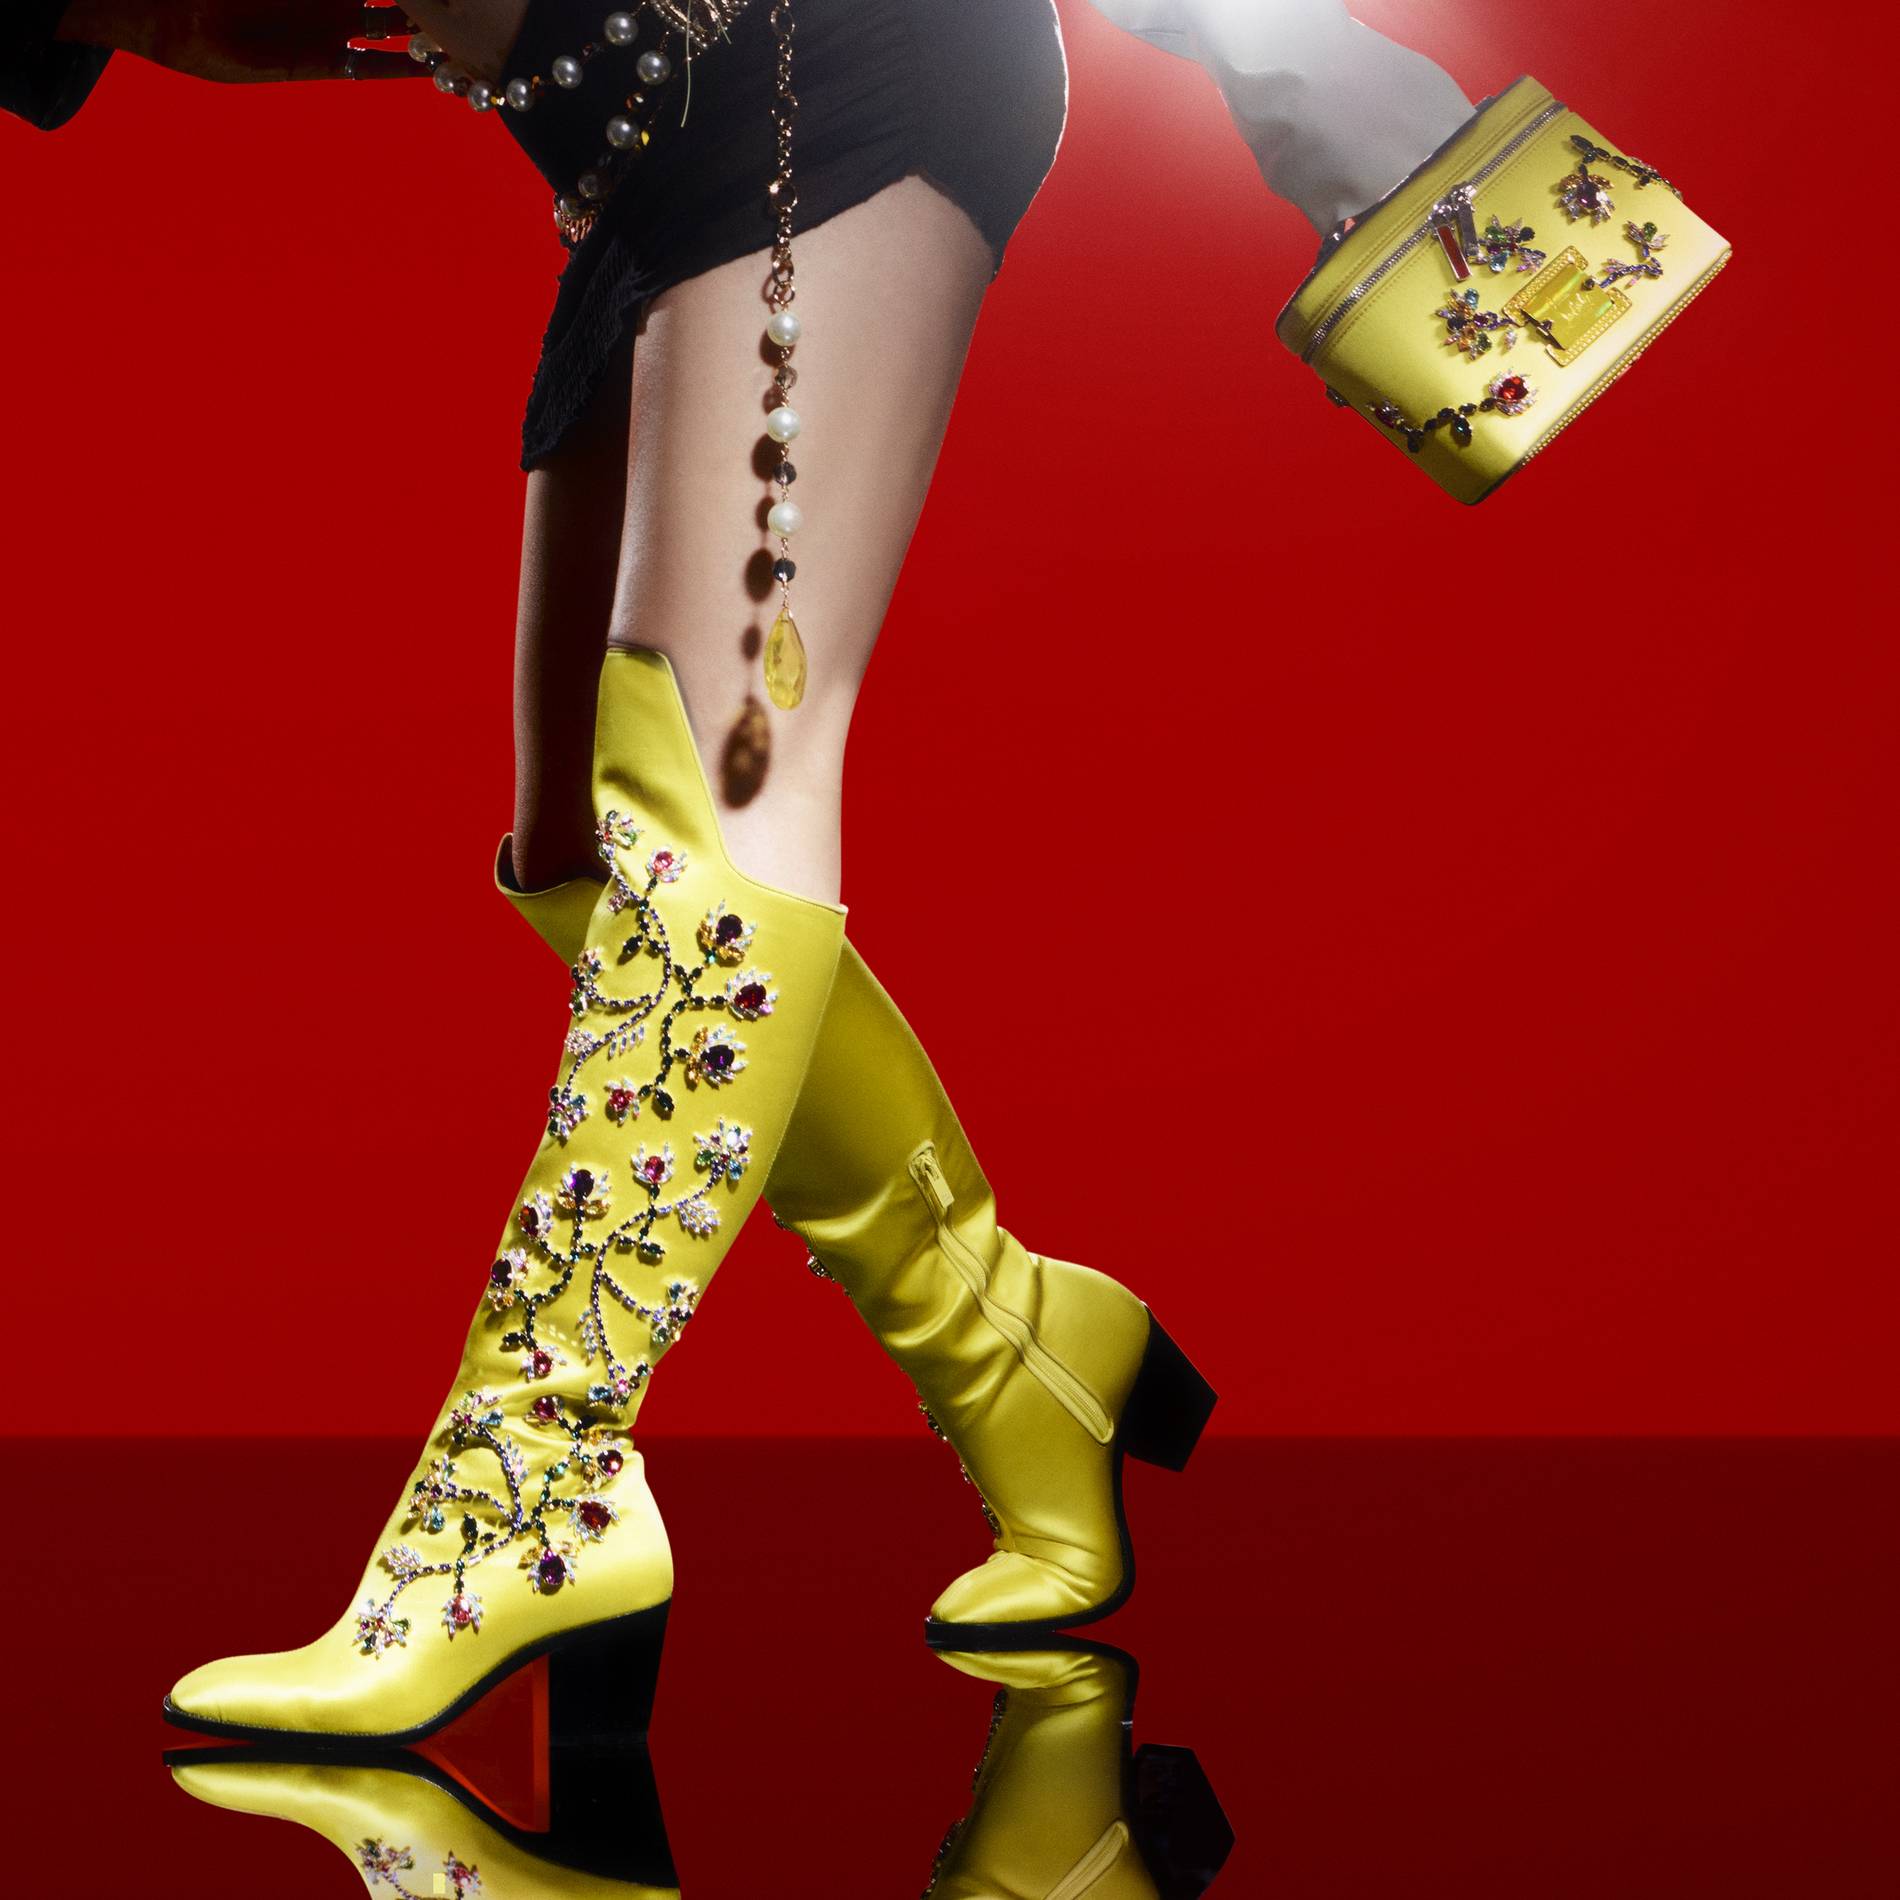 Christian Louboutin "Our Angles" yellow boot